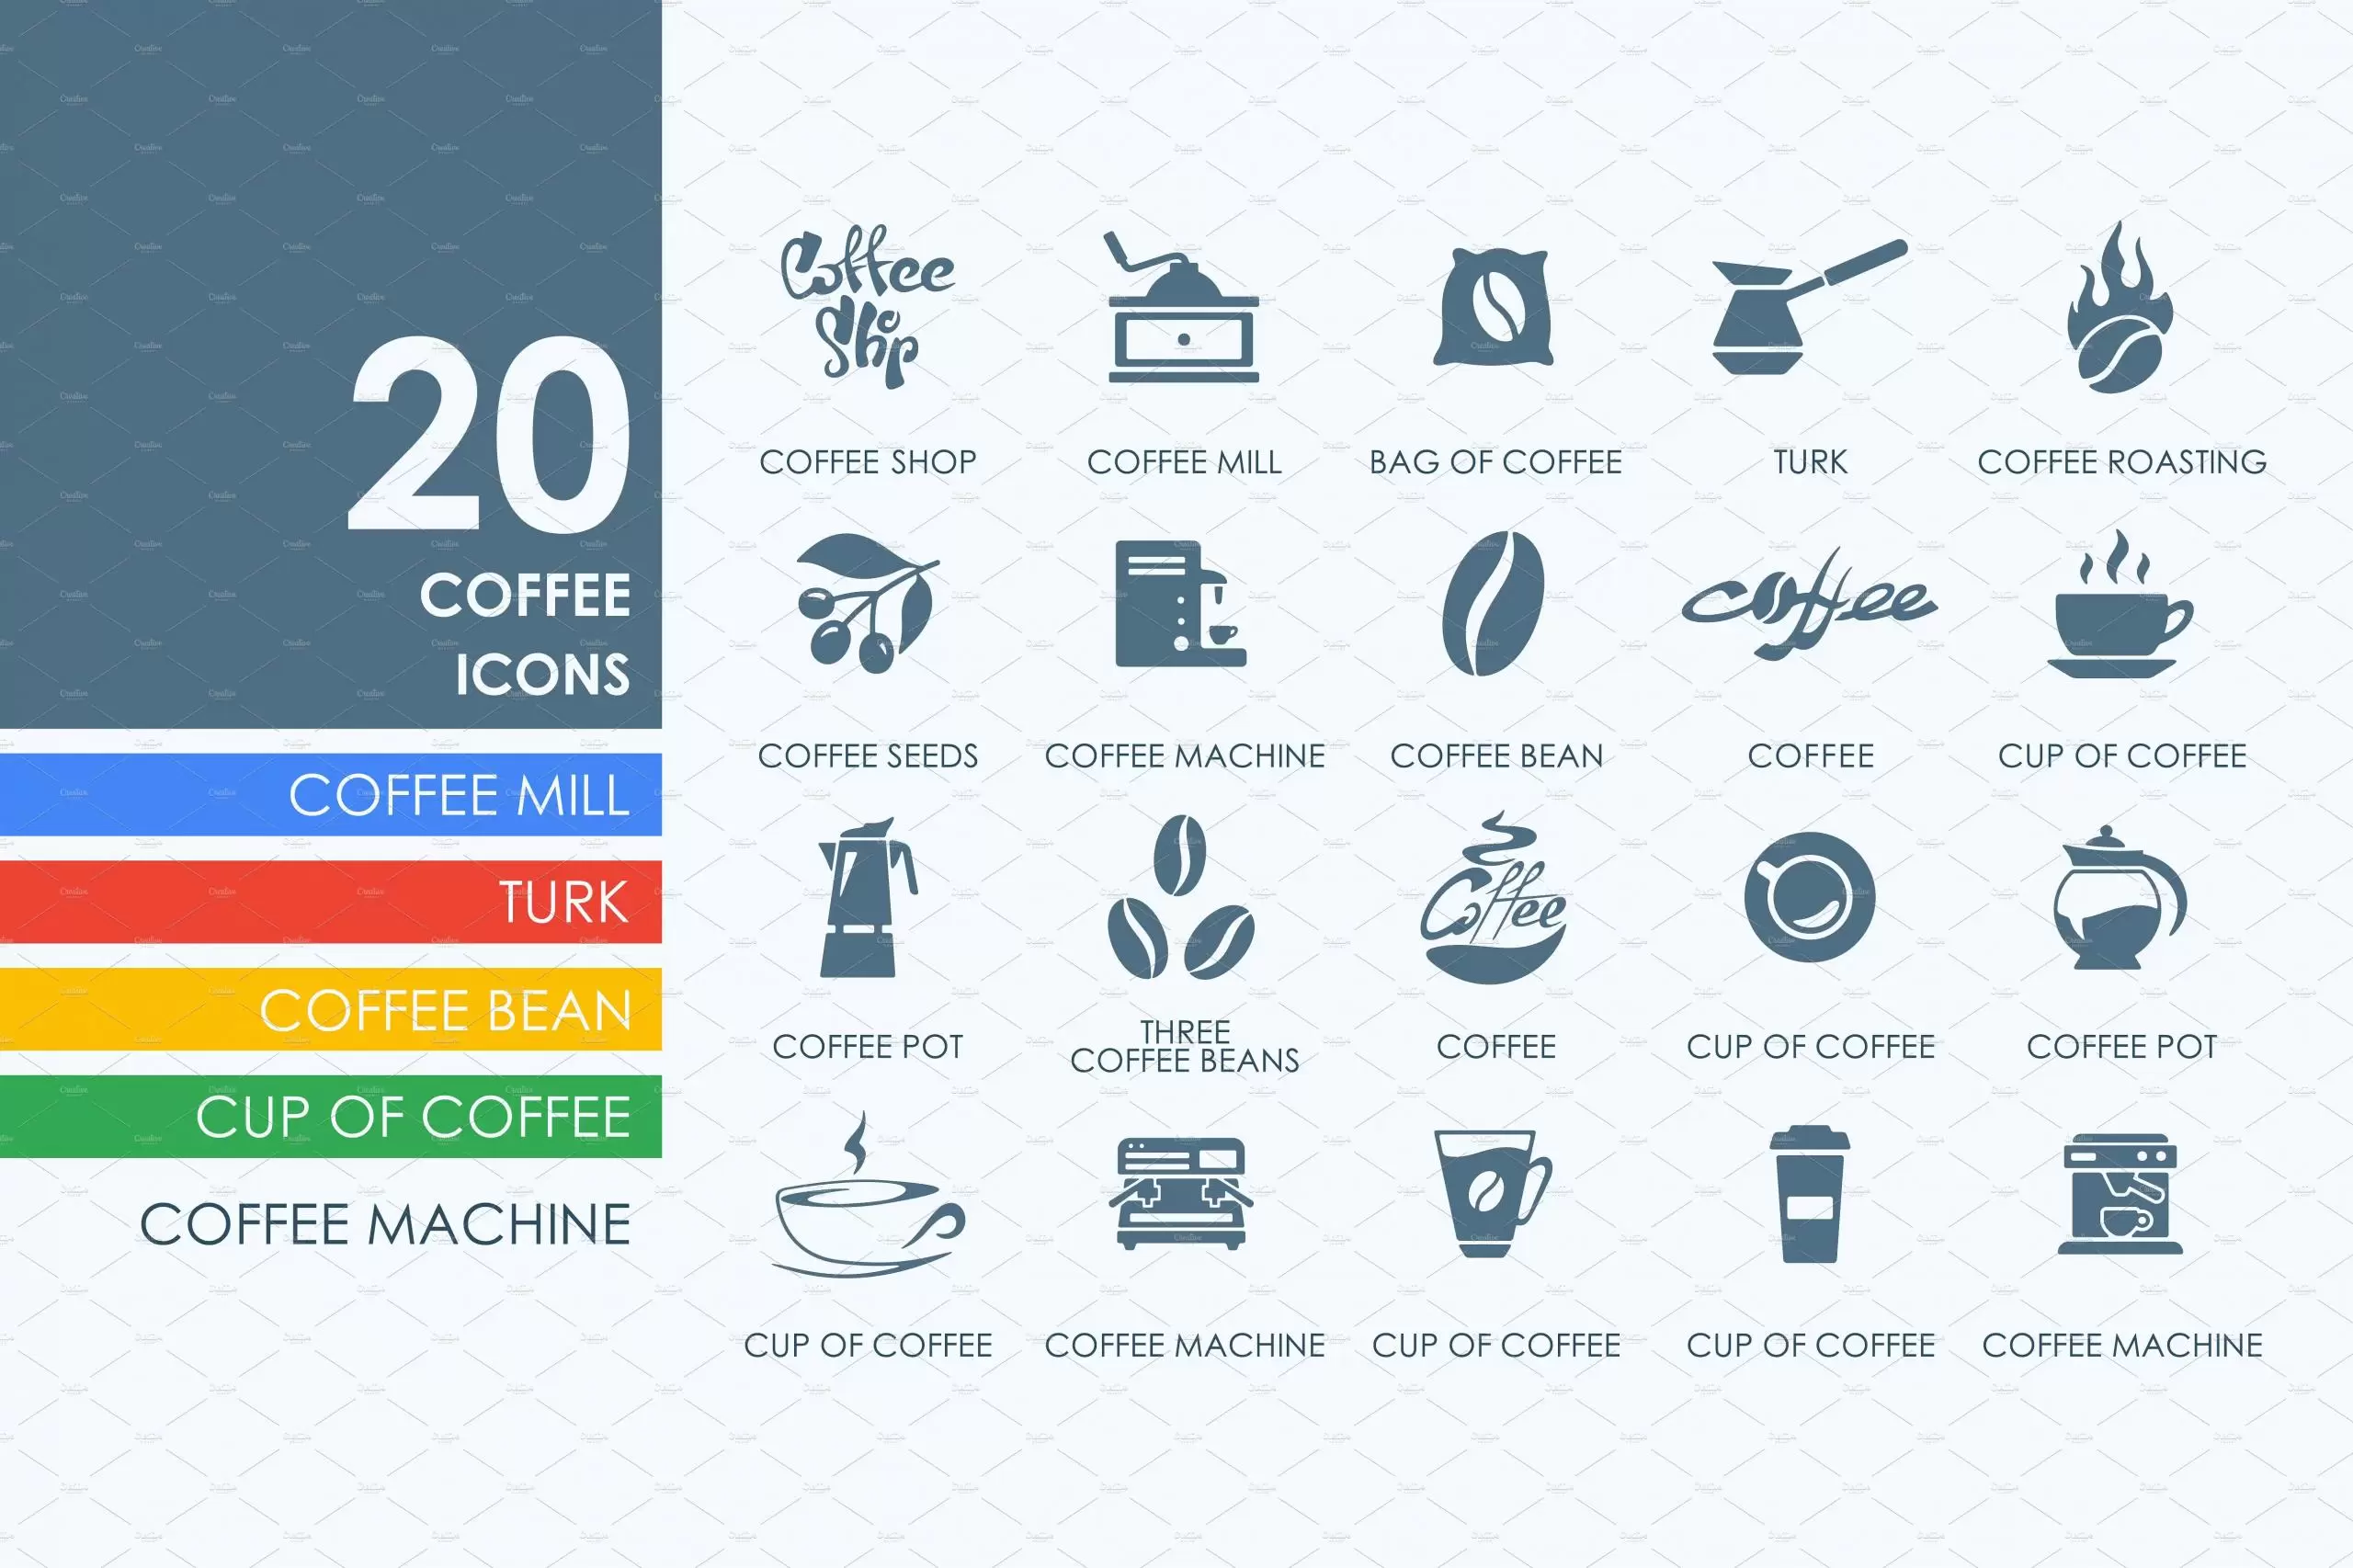 咖啡图标素材 20 Coffee icons插图